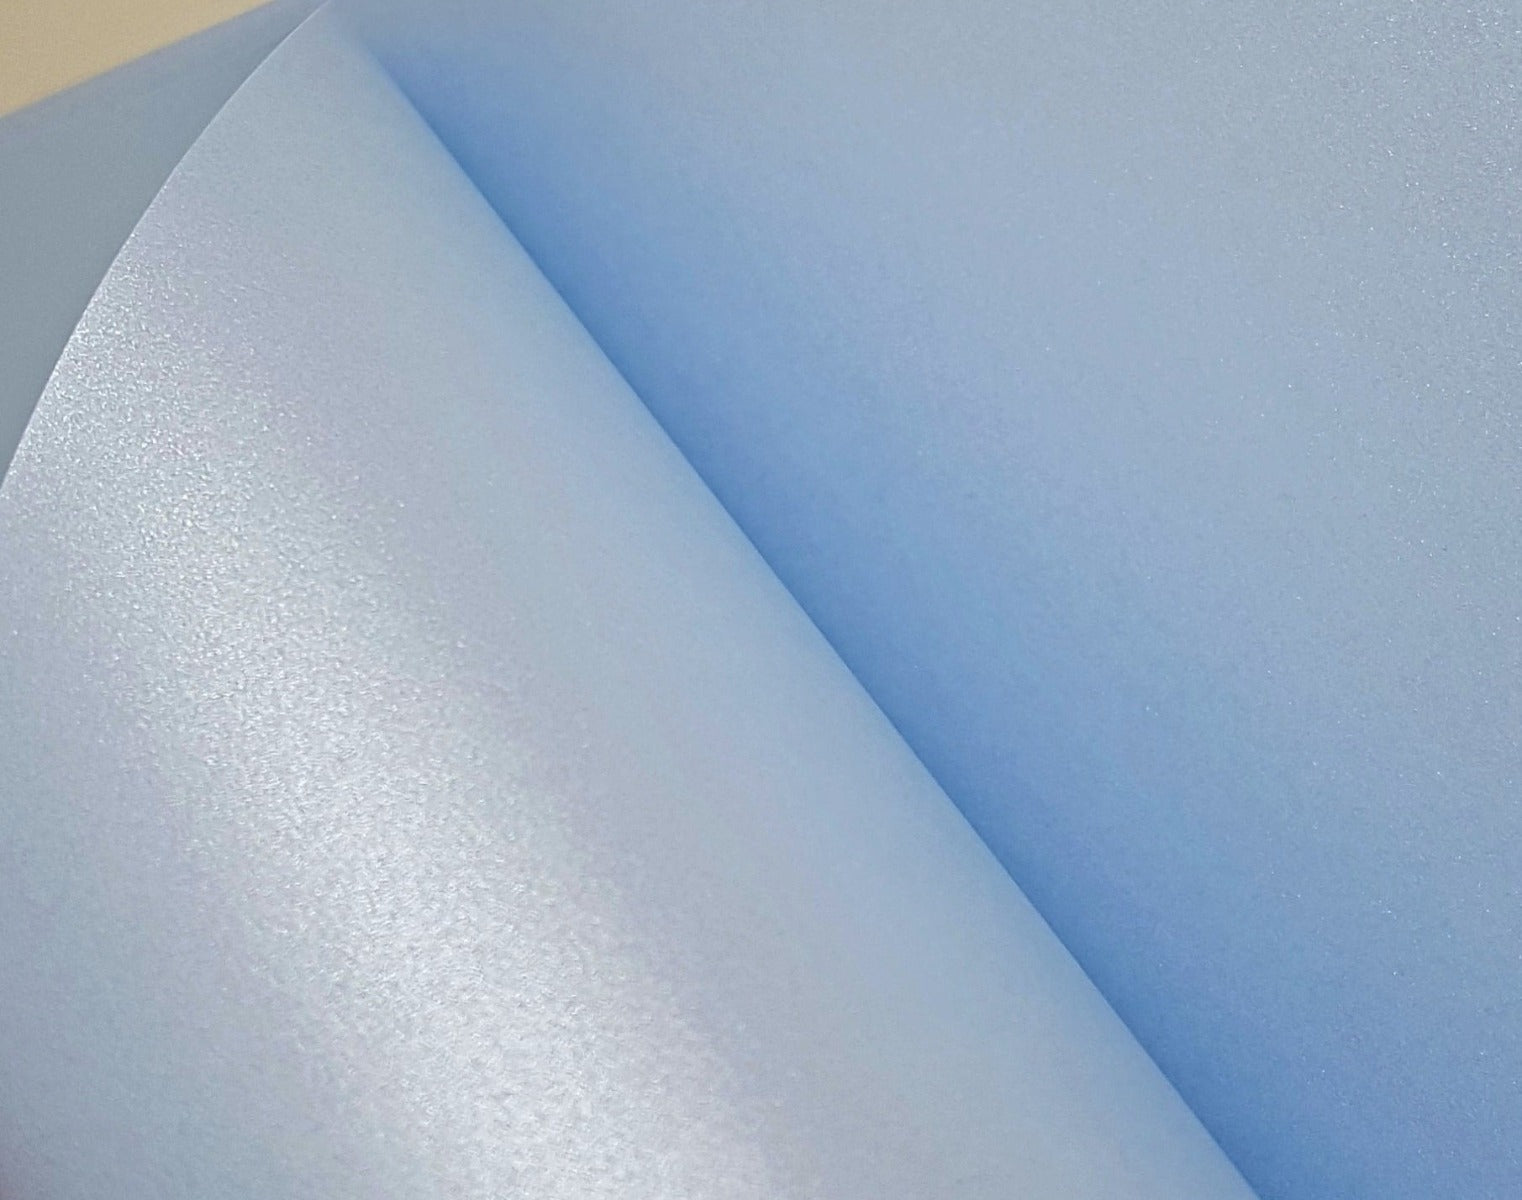 Papel Perolado Liso Azul Serenity 20 folhas A4 - 120g/180g - Papel Especial